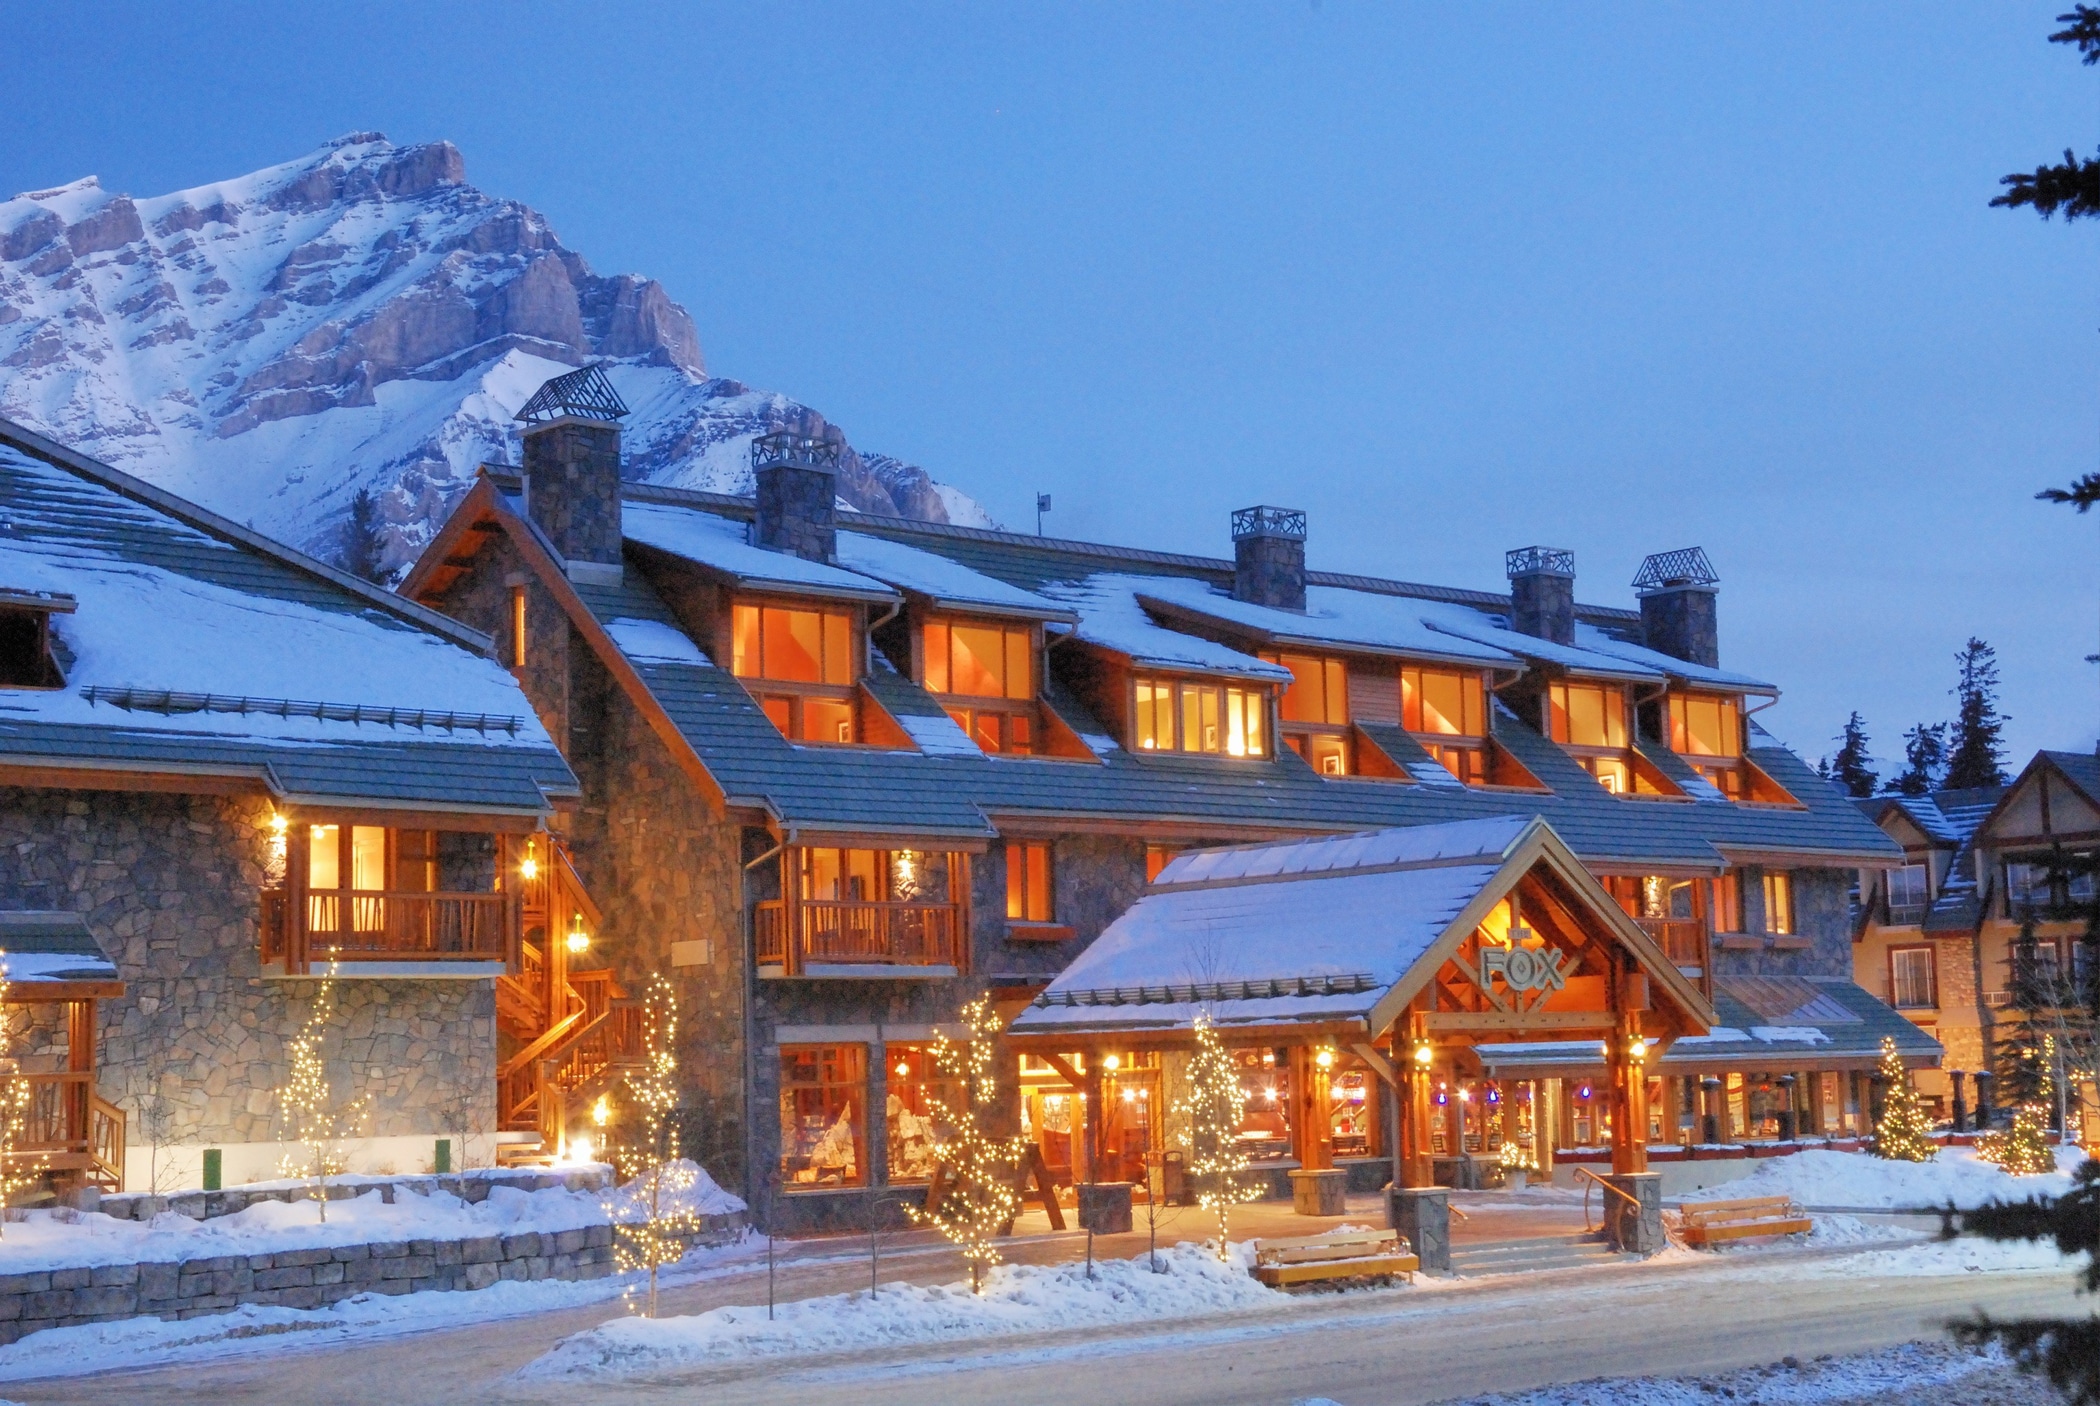 The Fox Hotel & Suites, Banff Ski Resort Canada - Snowcapped Travel